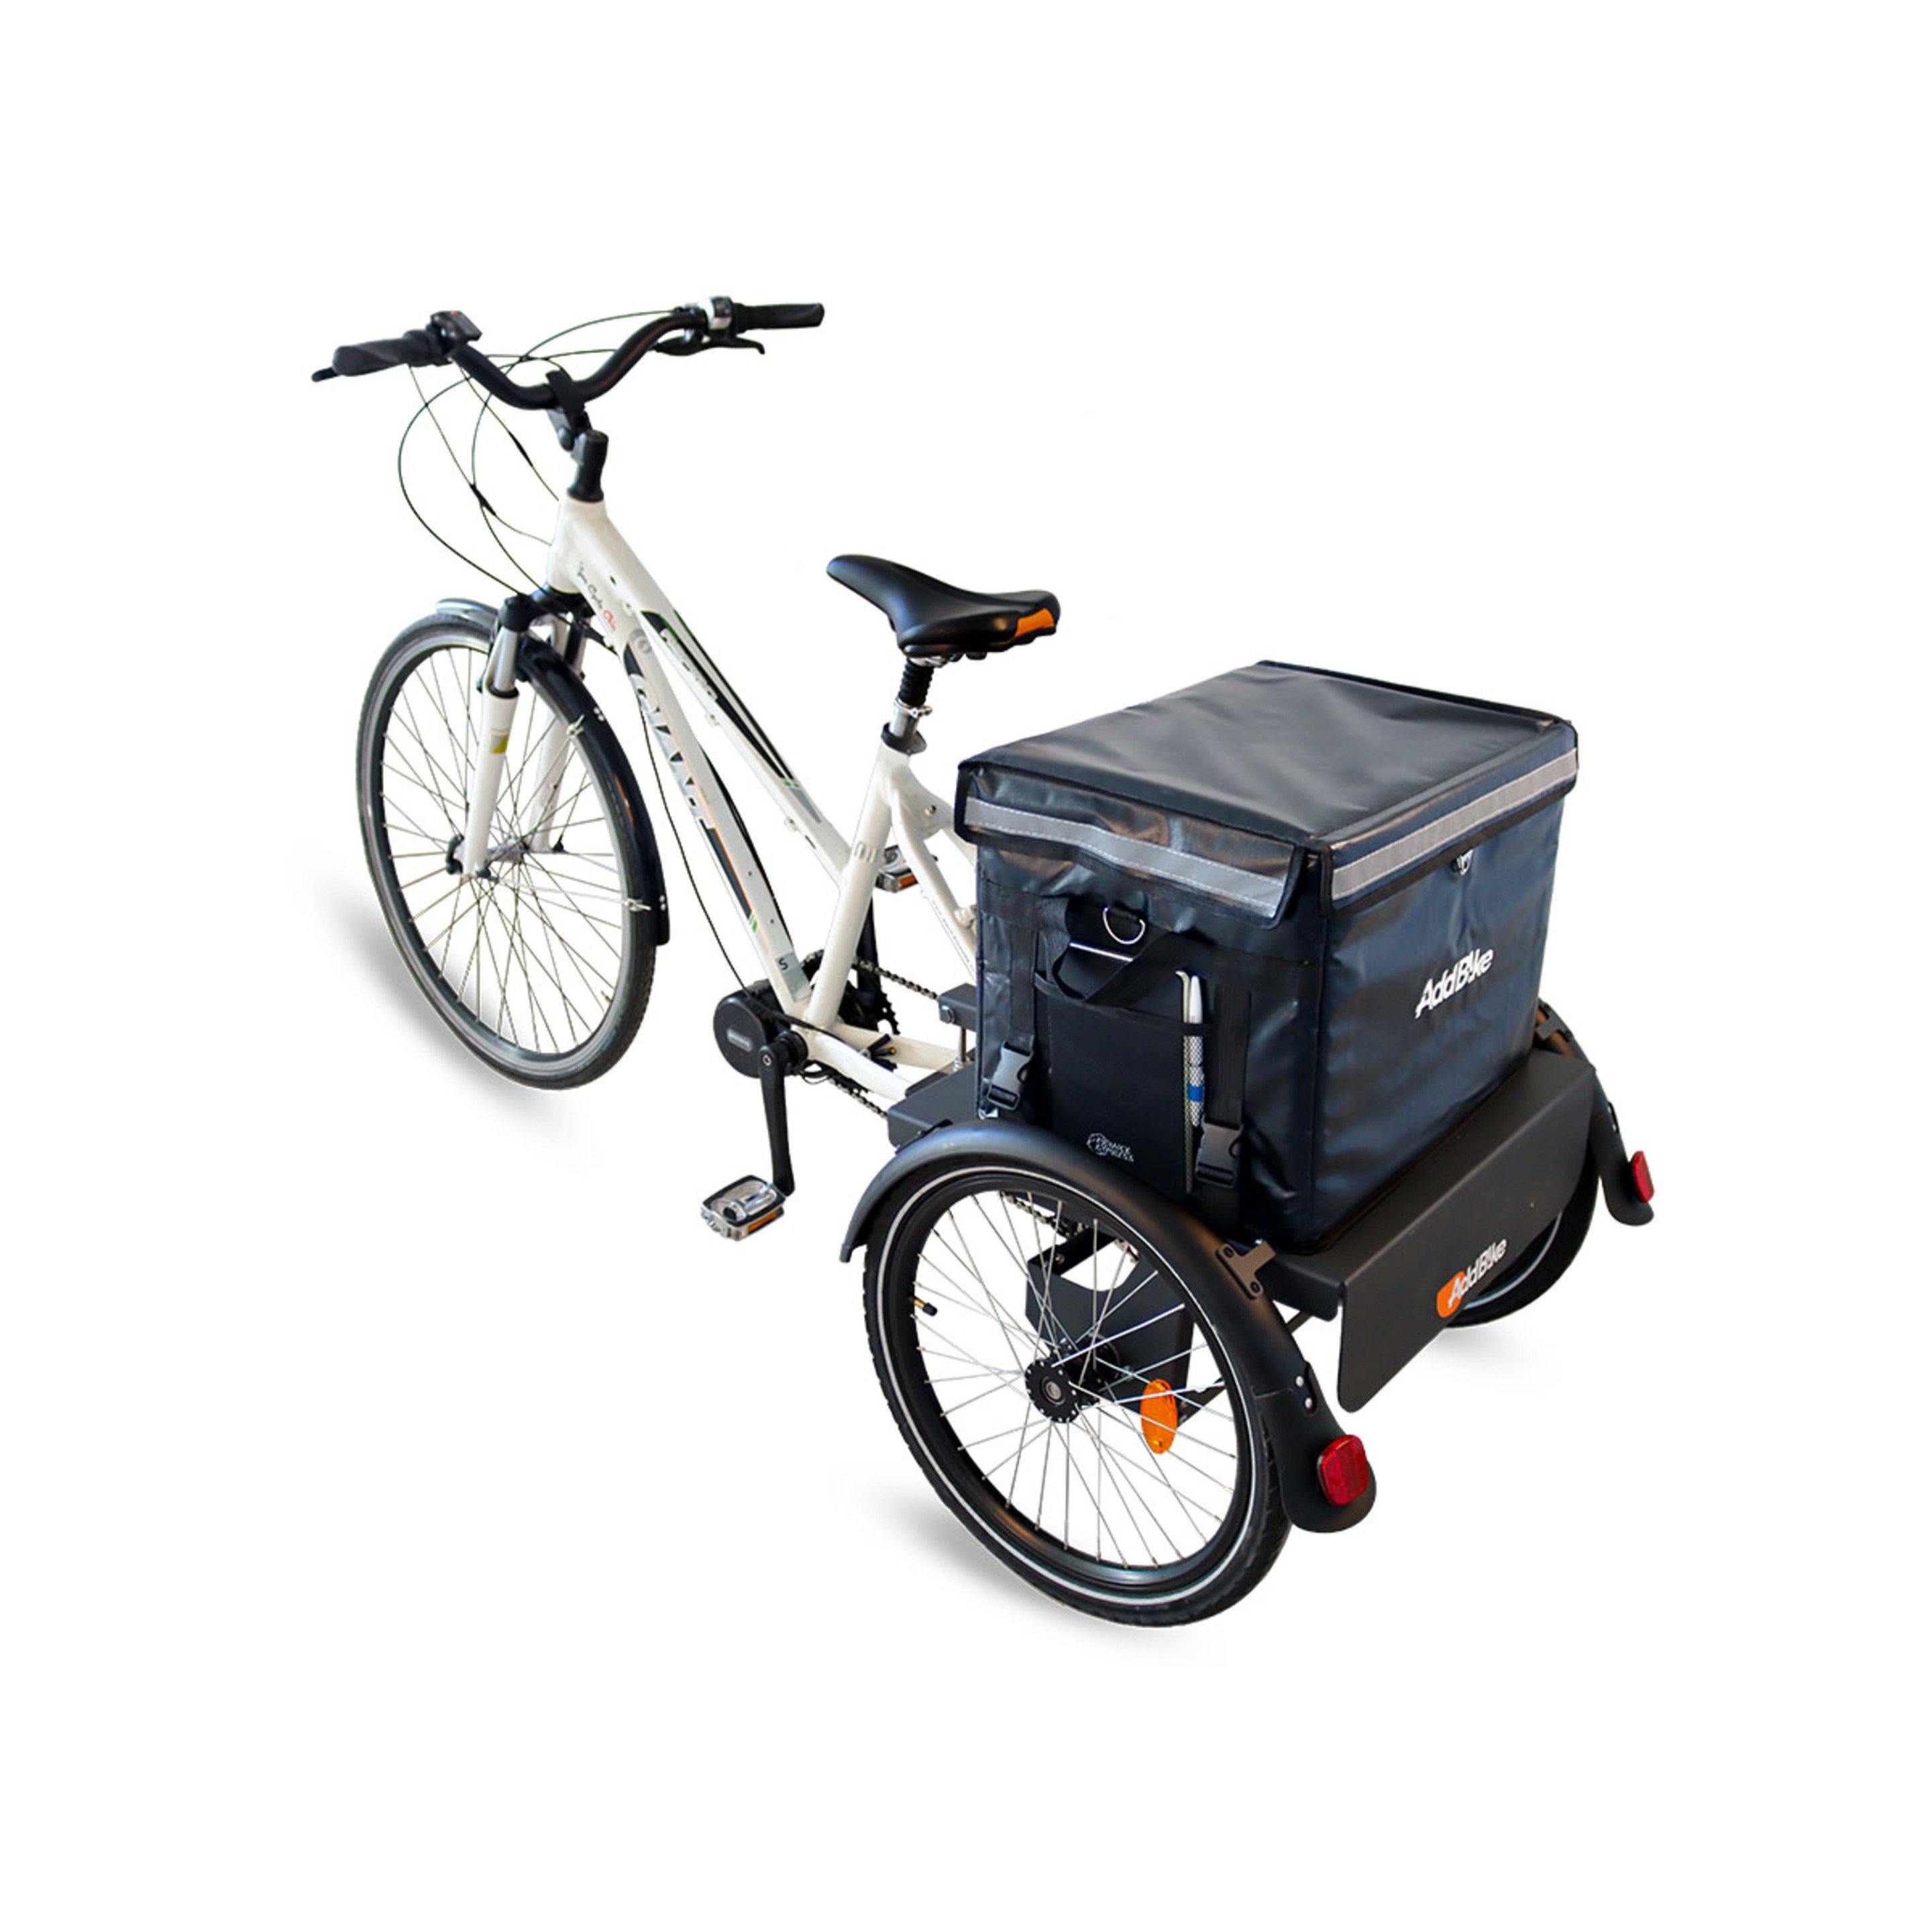 Kit Trasero: Transporte De Carga  Addbike B-back Box - gris - 